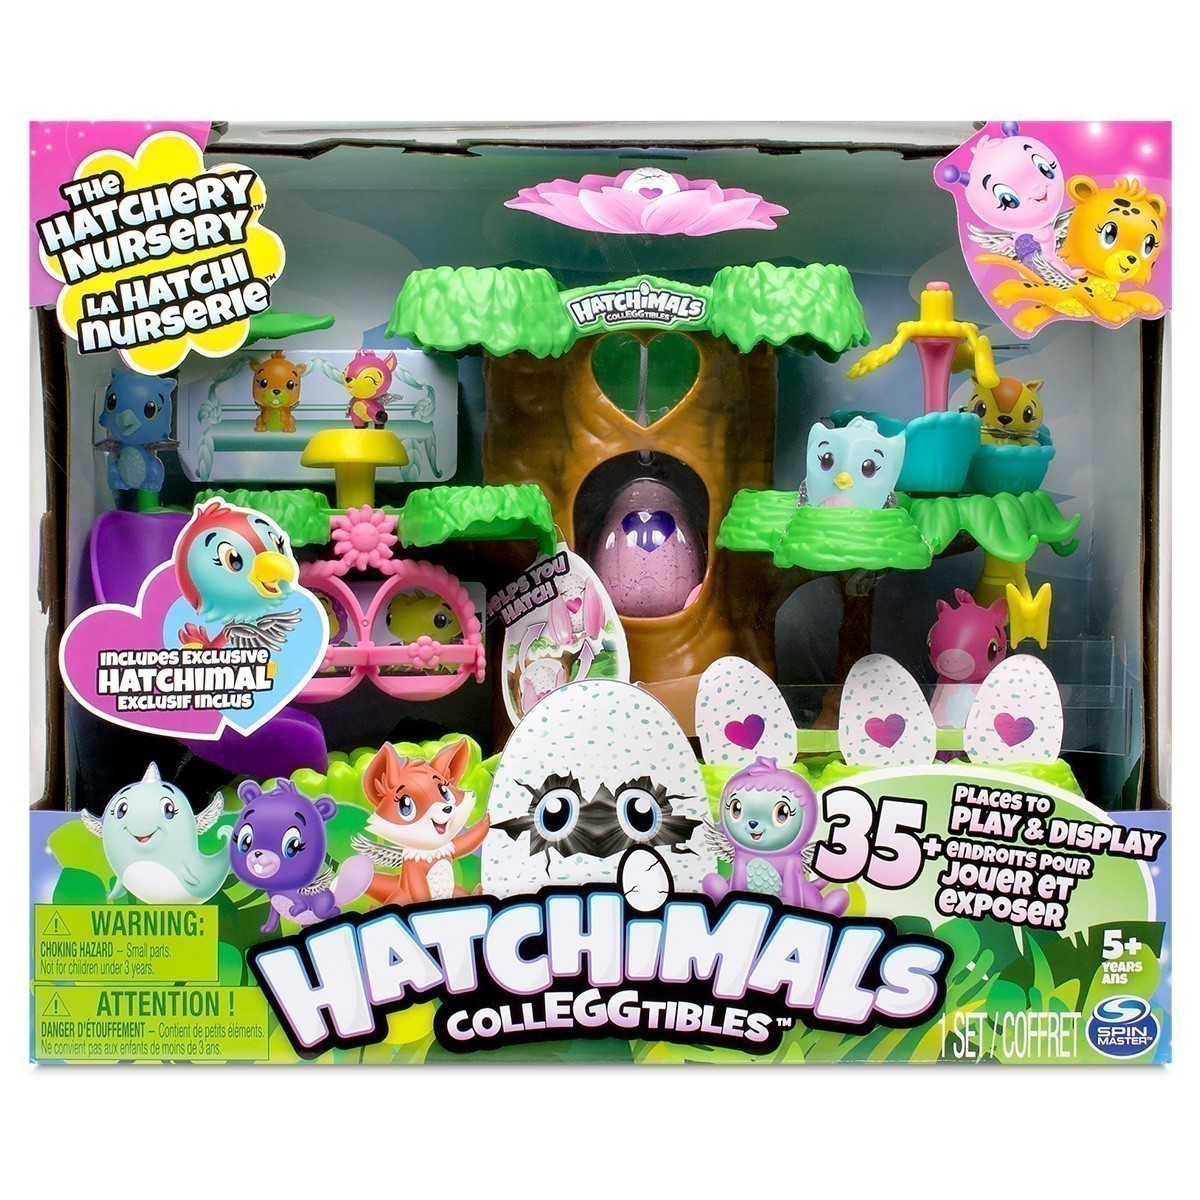 Hatchimals Colleggtibles - The Hatchery Nursery Playset